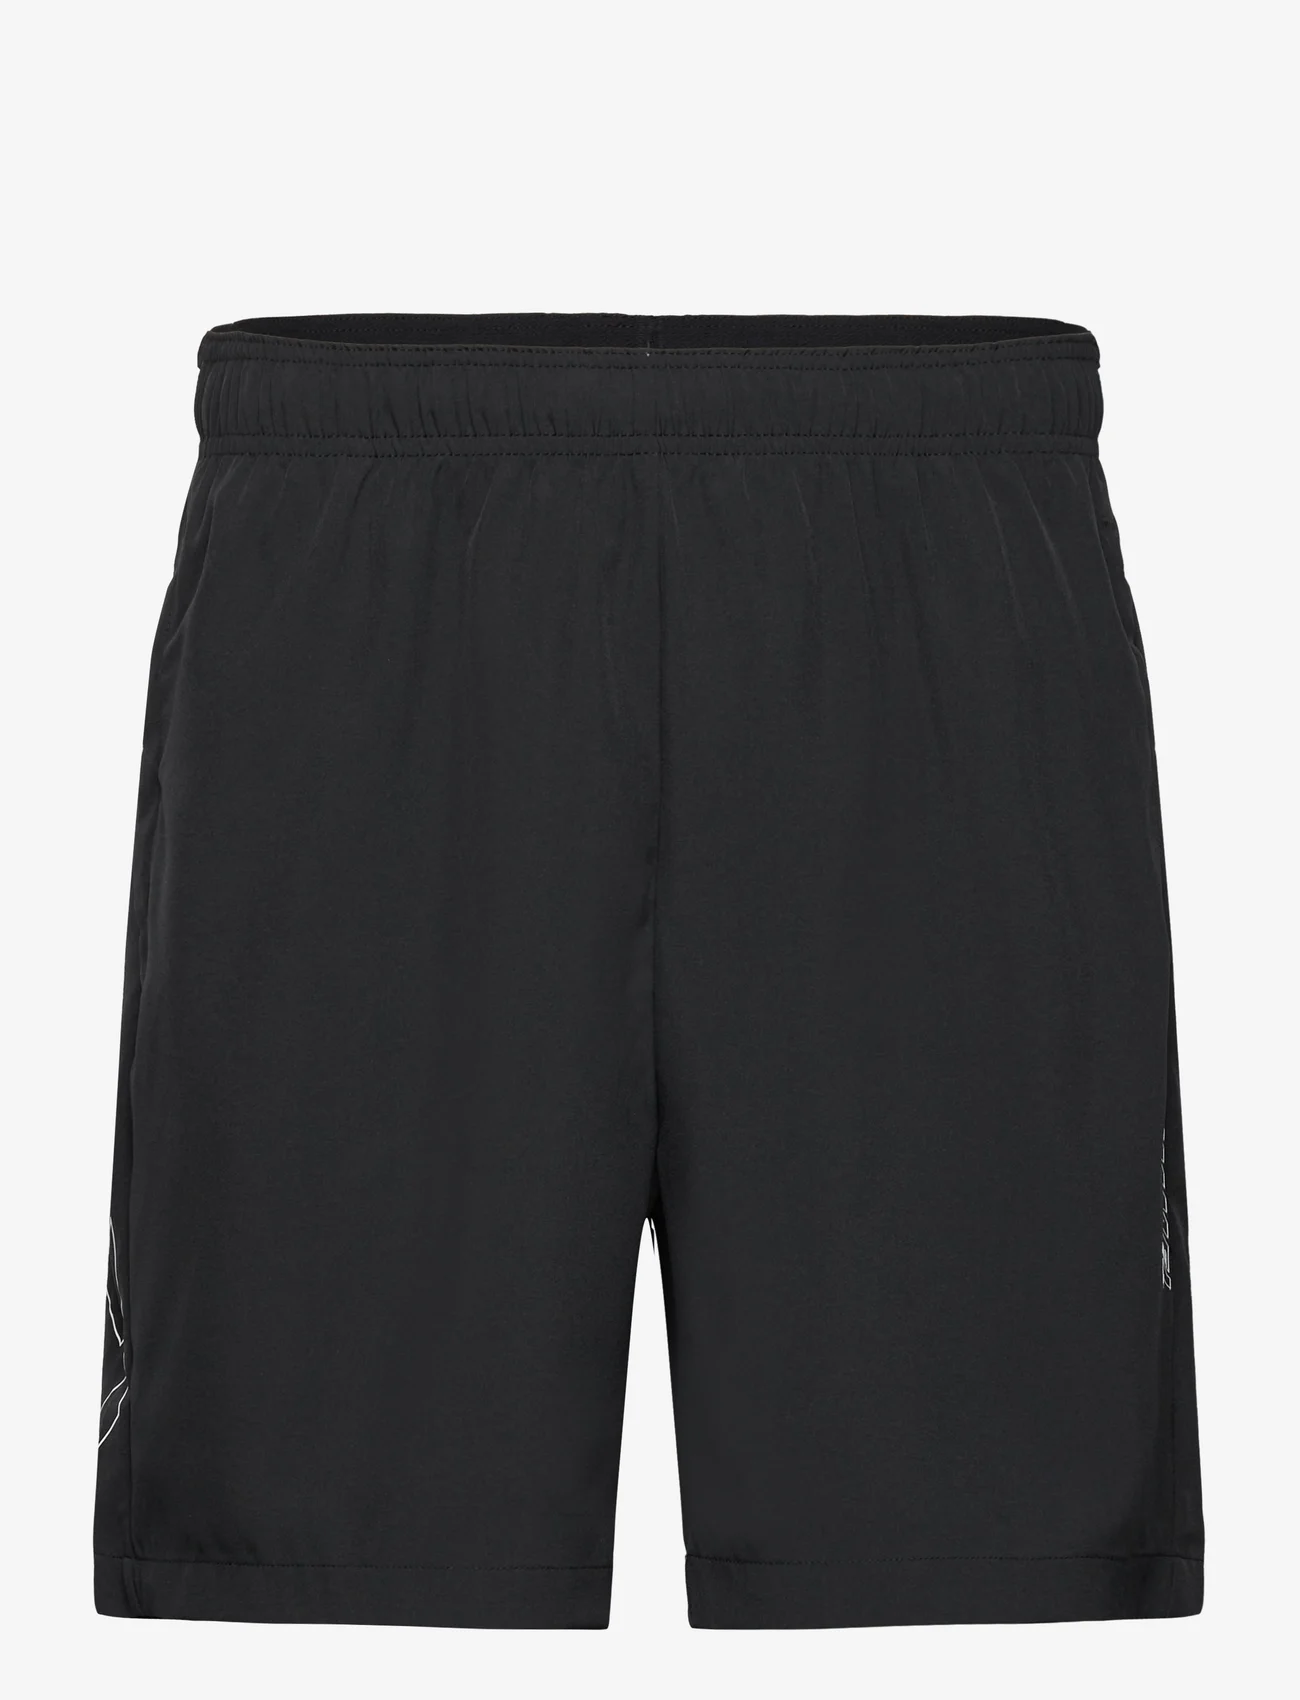 Hummel - hmlTE BASE WOVEN SHORTS - training shorts - black - 0